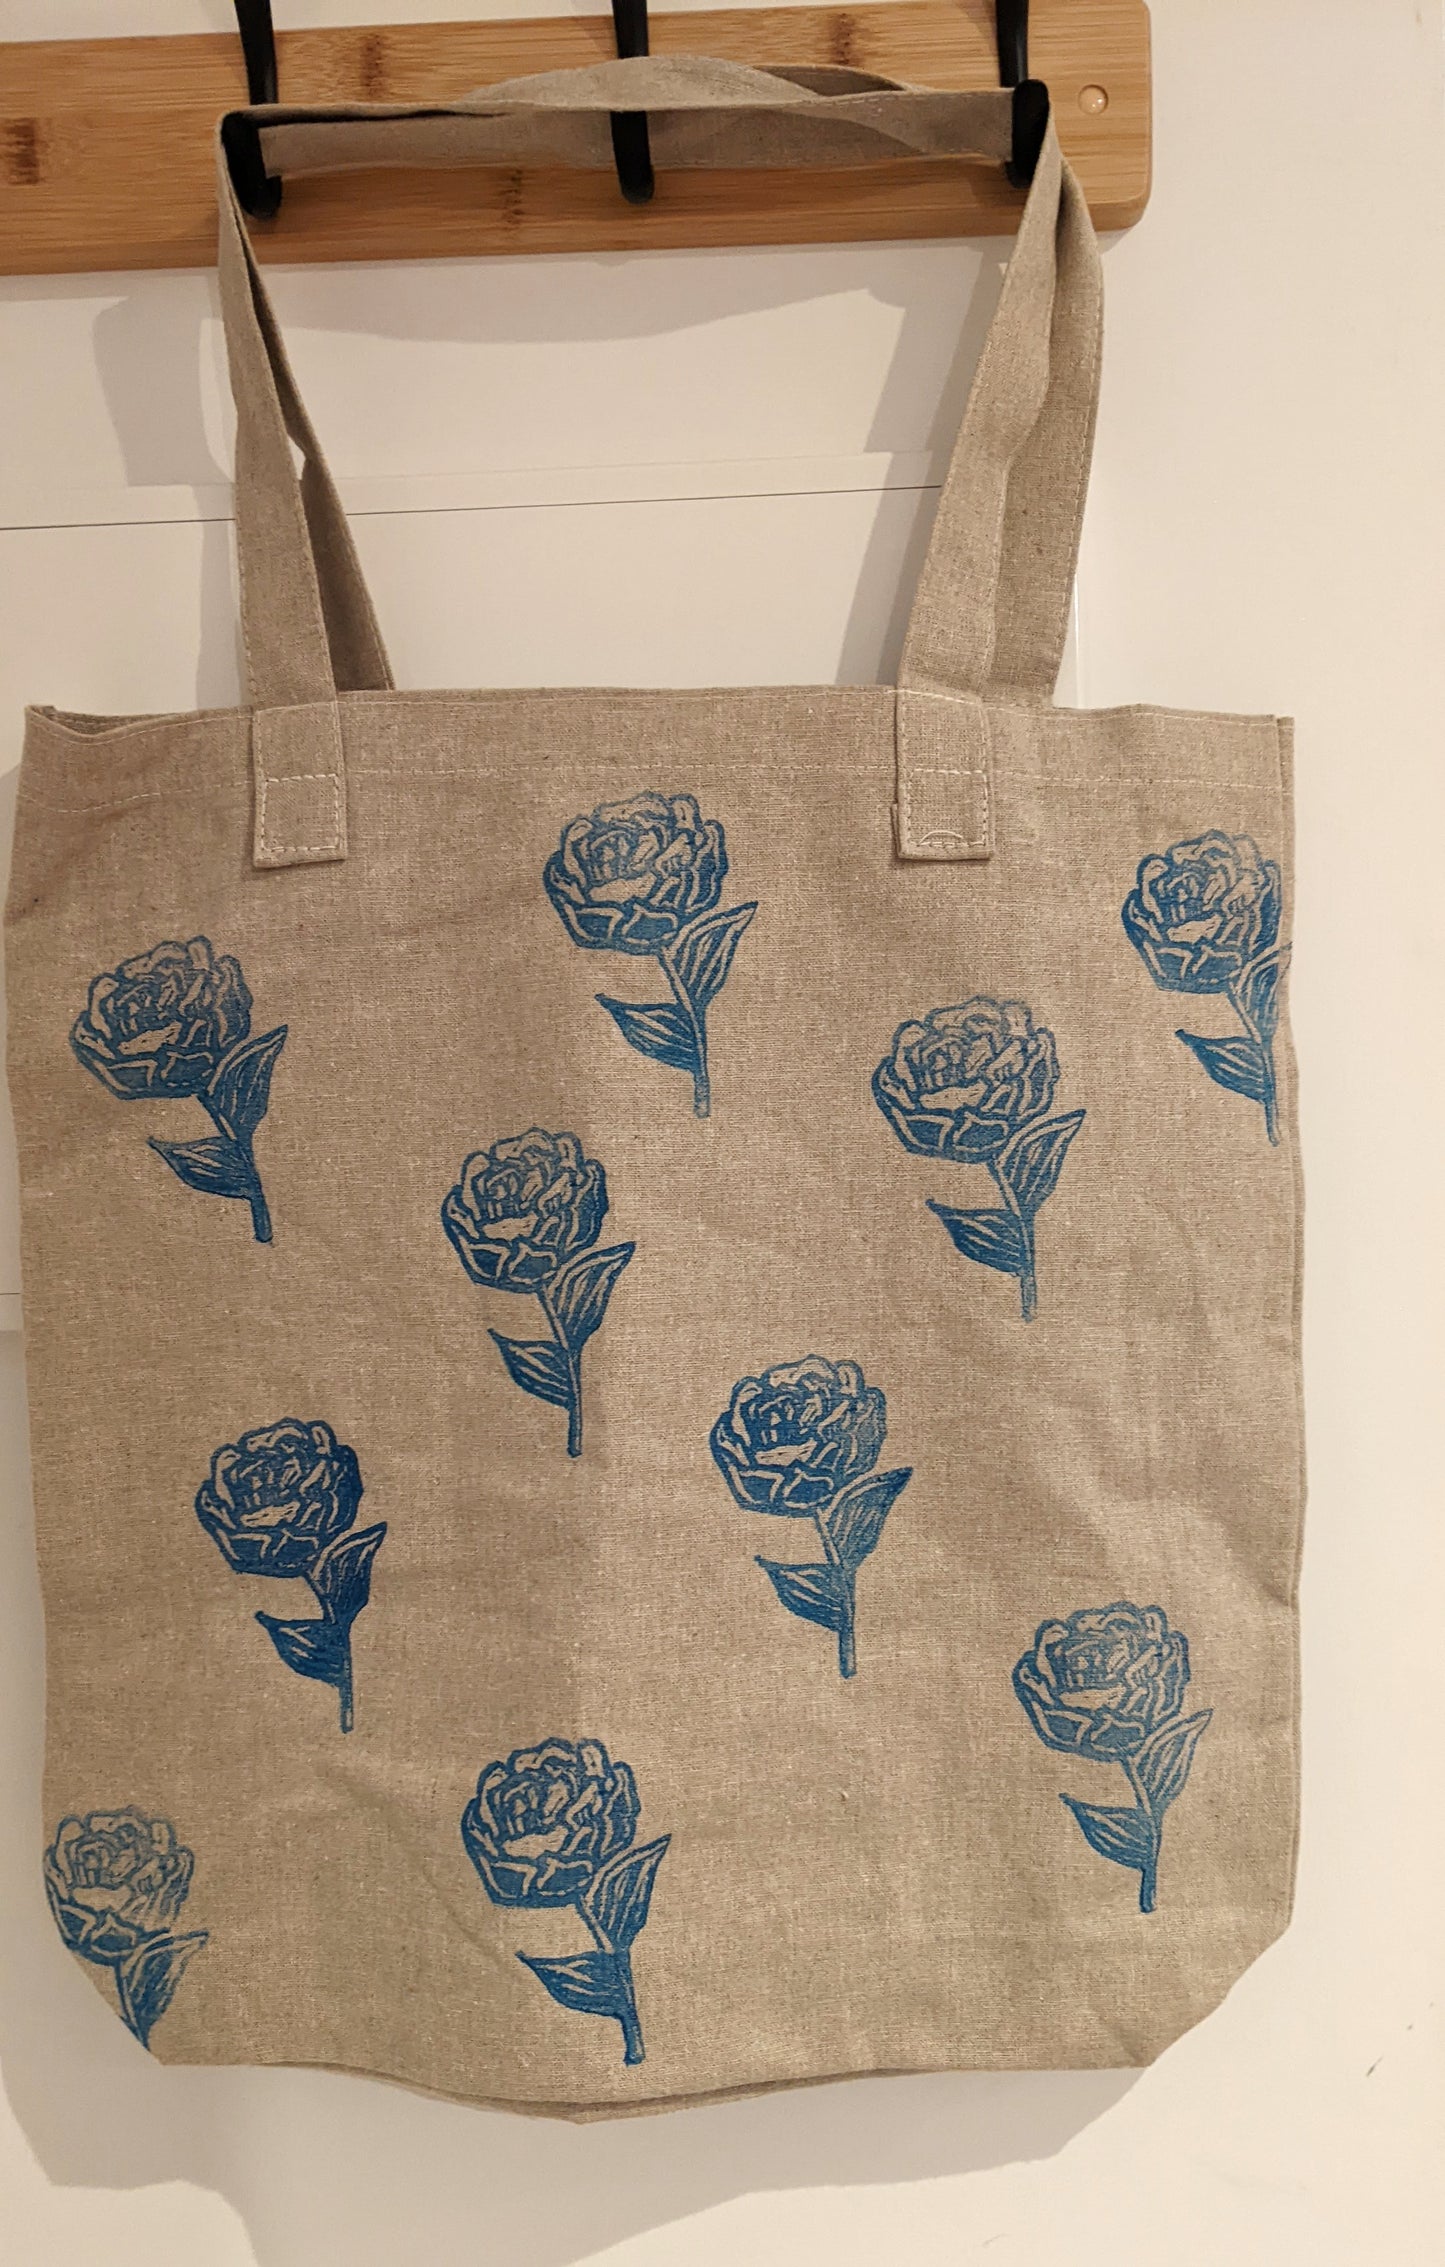 Hand printed hemp tote bag by The Arthly Box